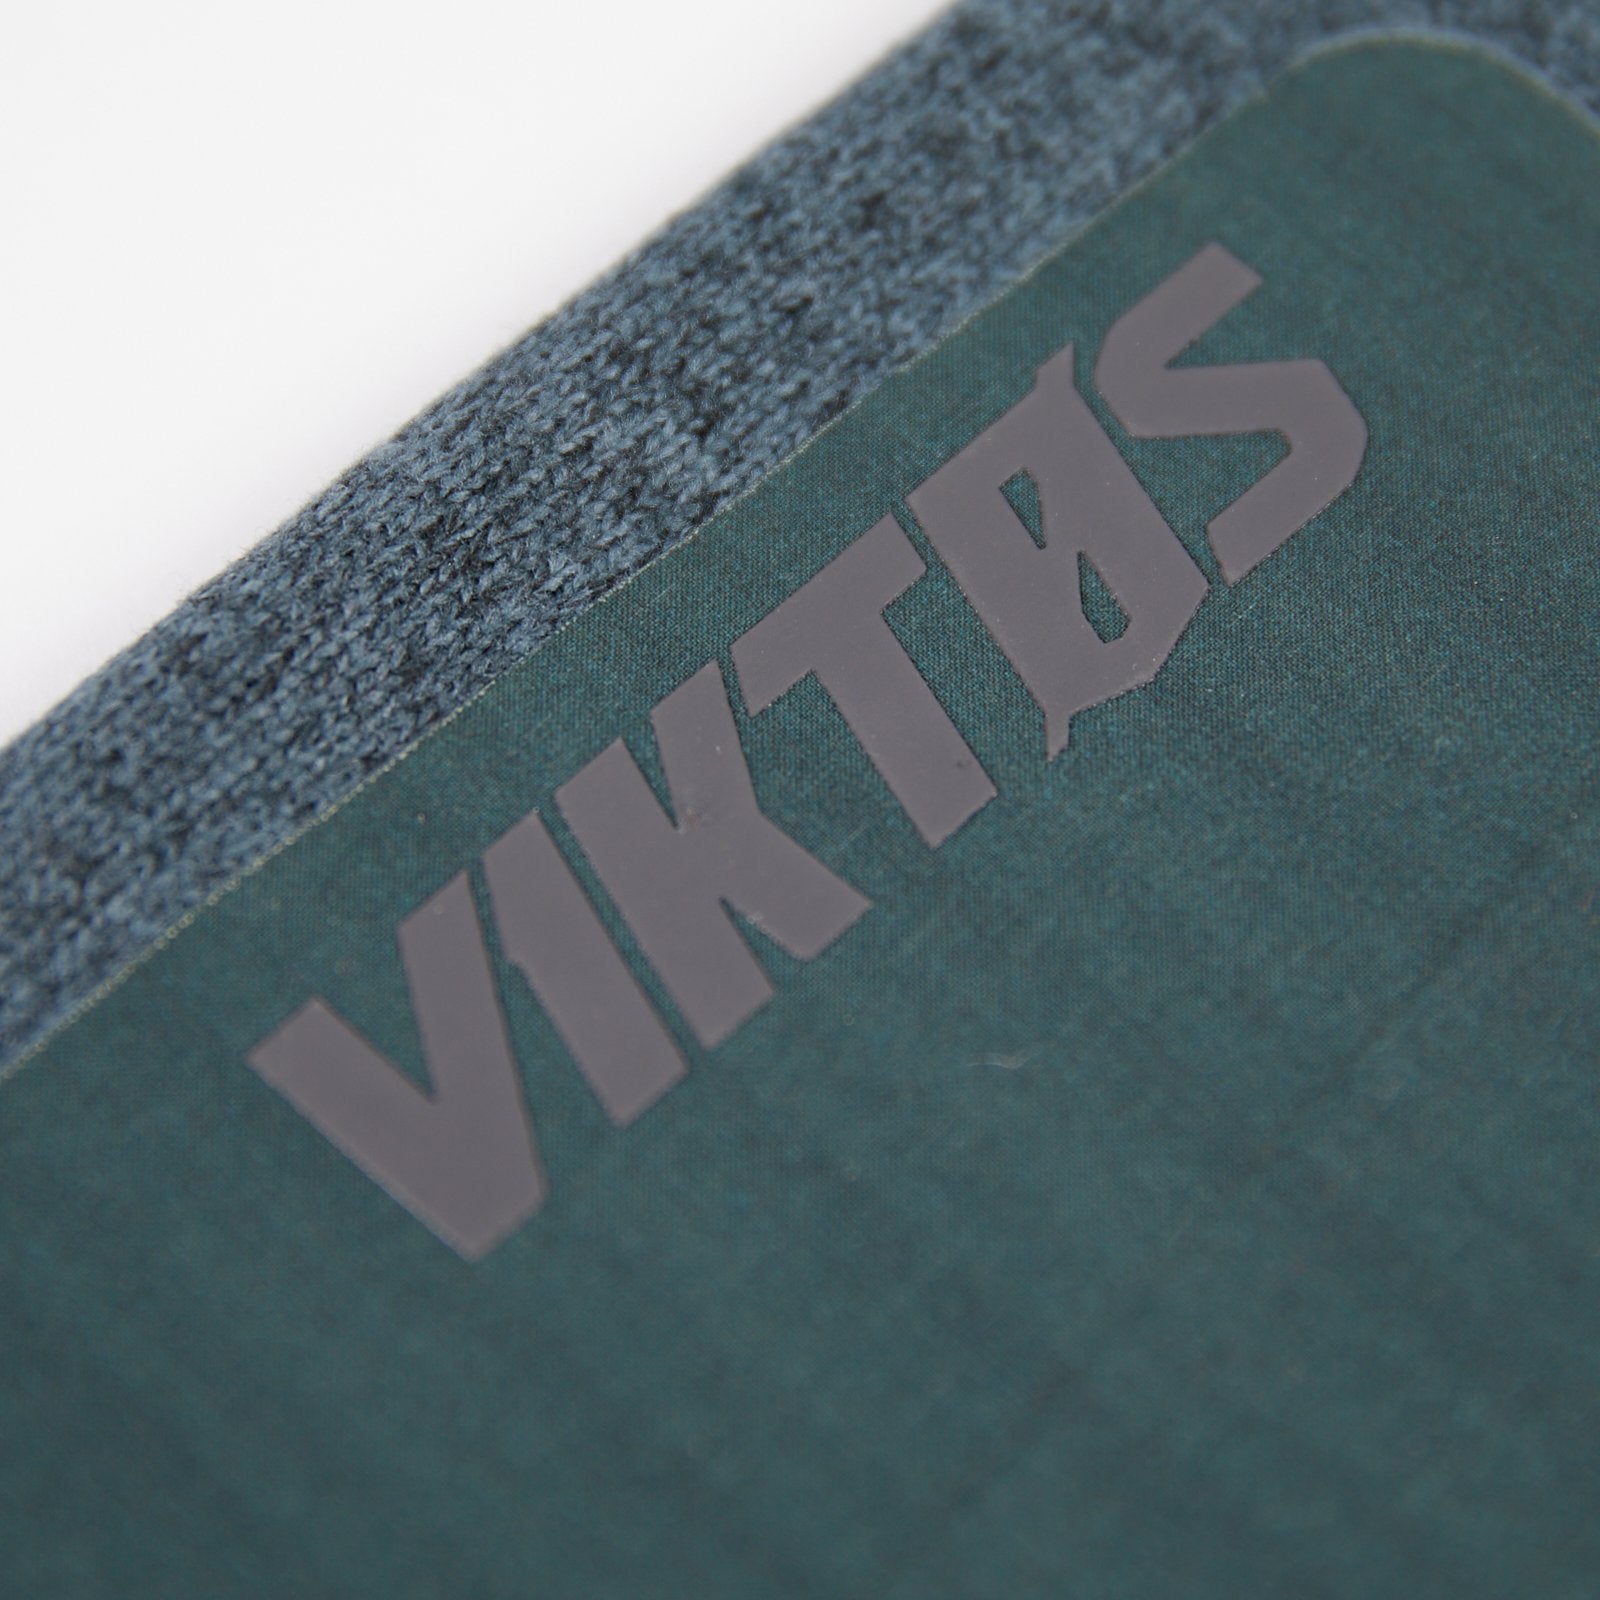 VIKTOS Gunfighter Sweater Seabound Outerwear VIKTOS Tactical Gear Supplier Tactical Distributors Australia